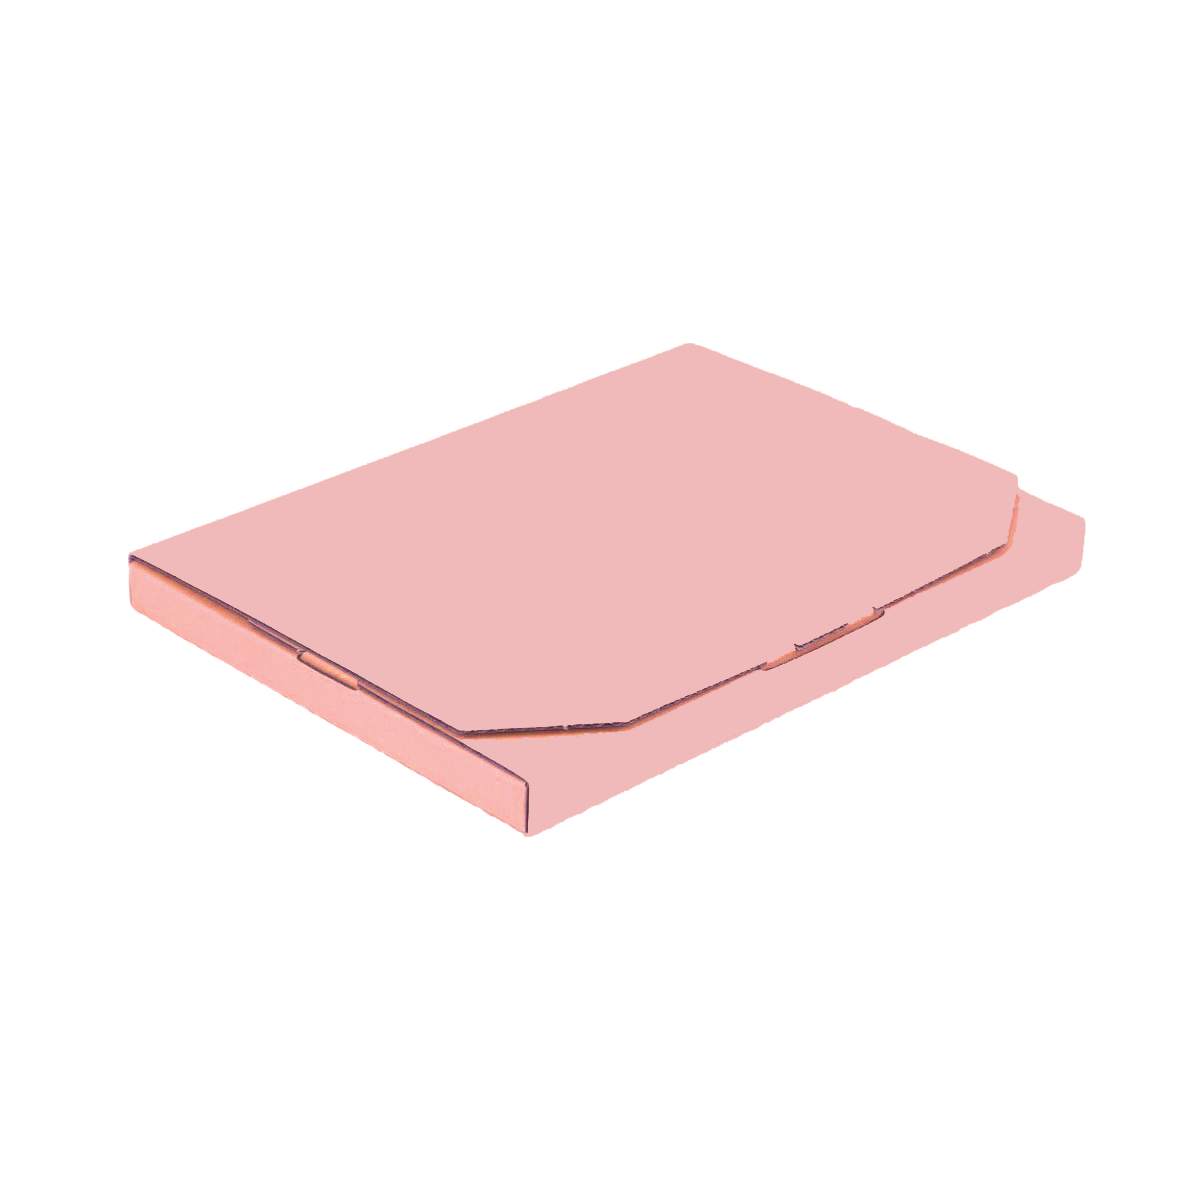 220 x 160 x 16mm Superflat Rose Pink Mailing Box B447 - eBPak